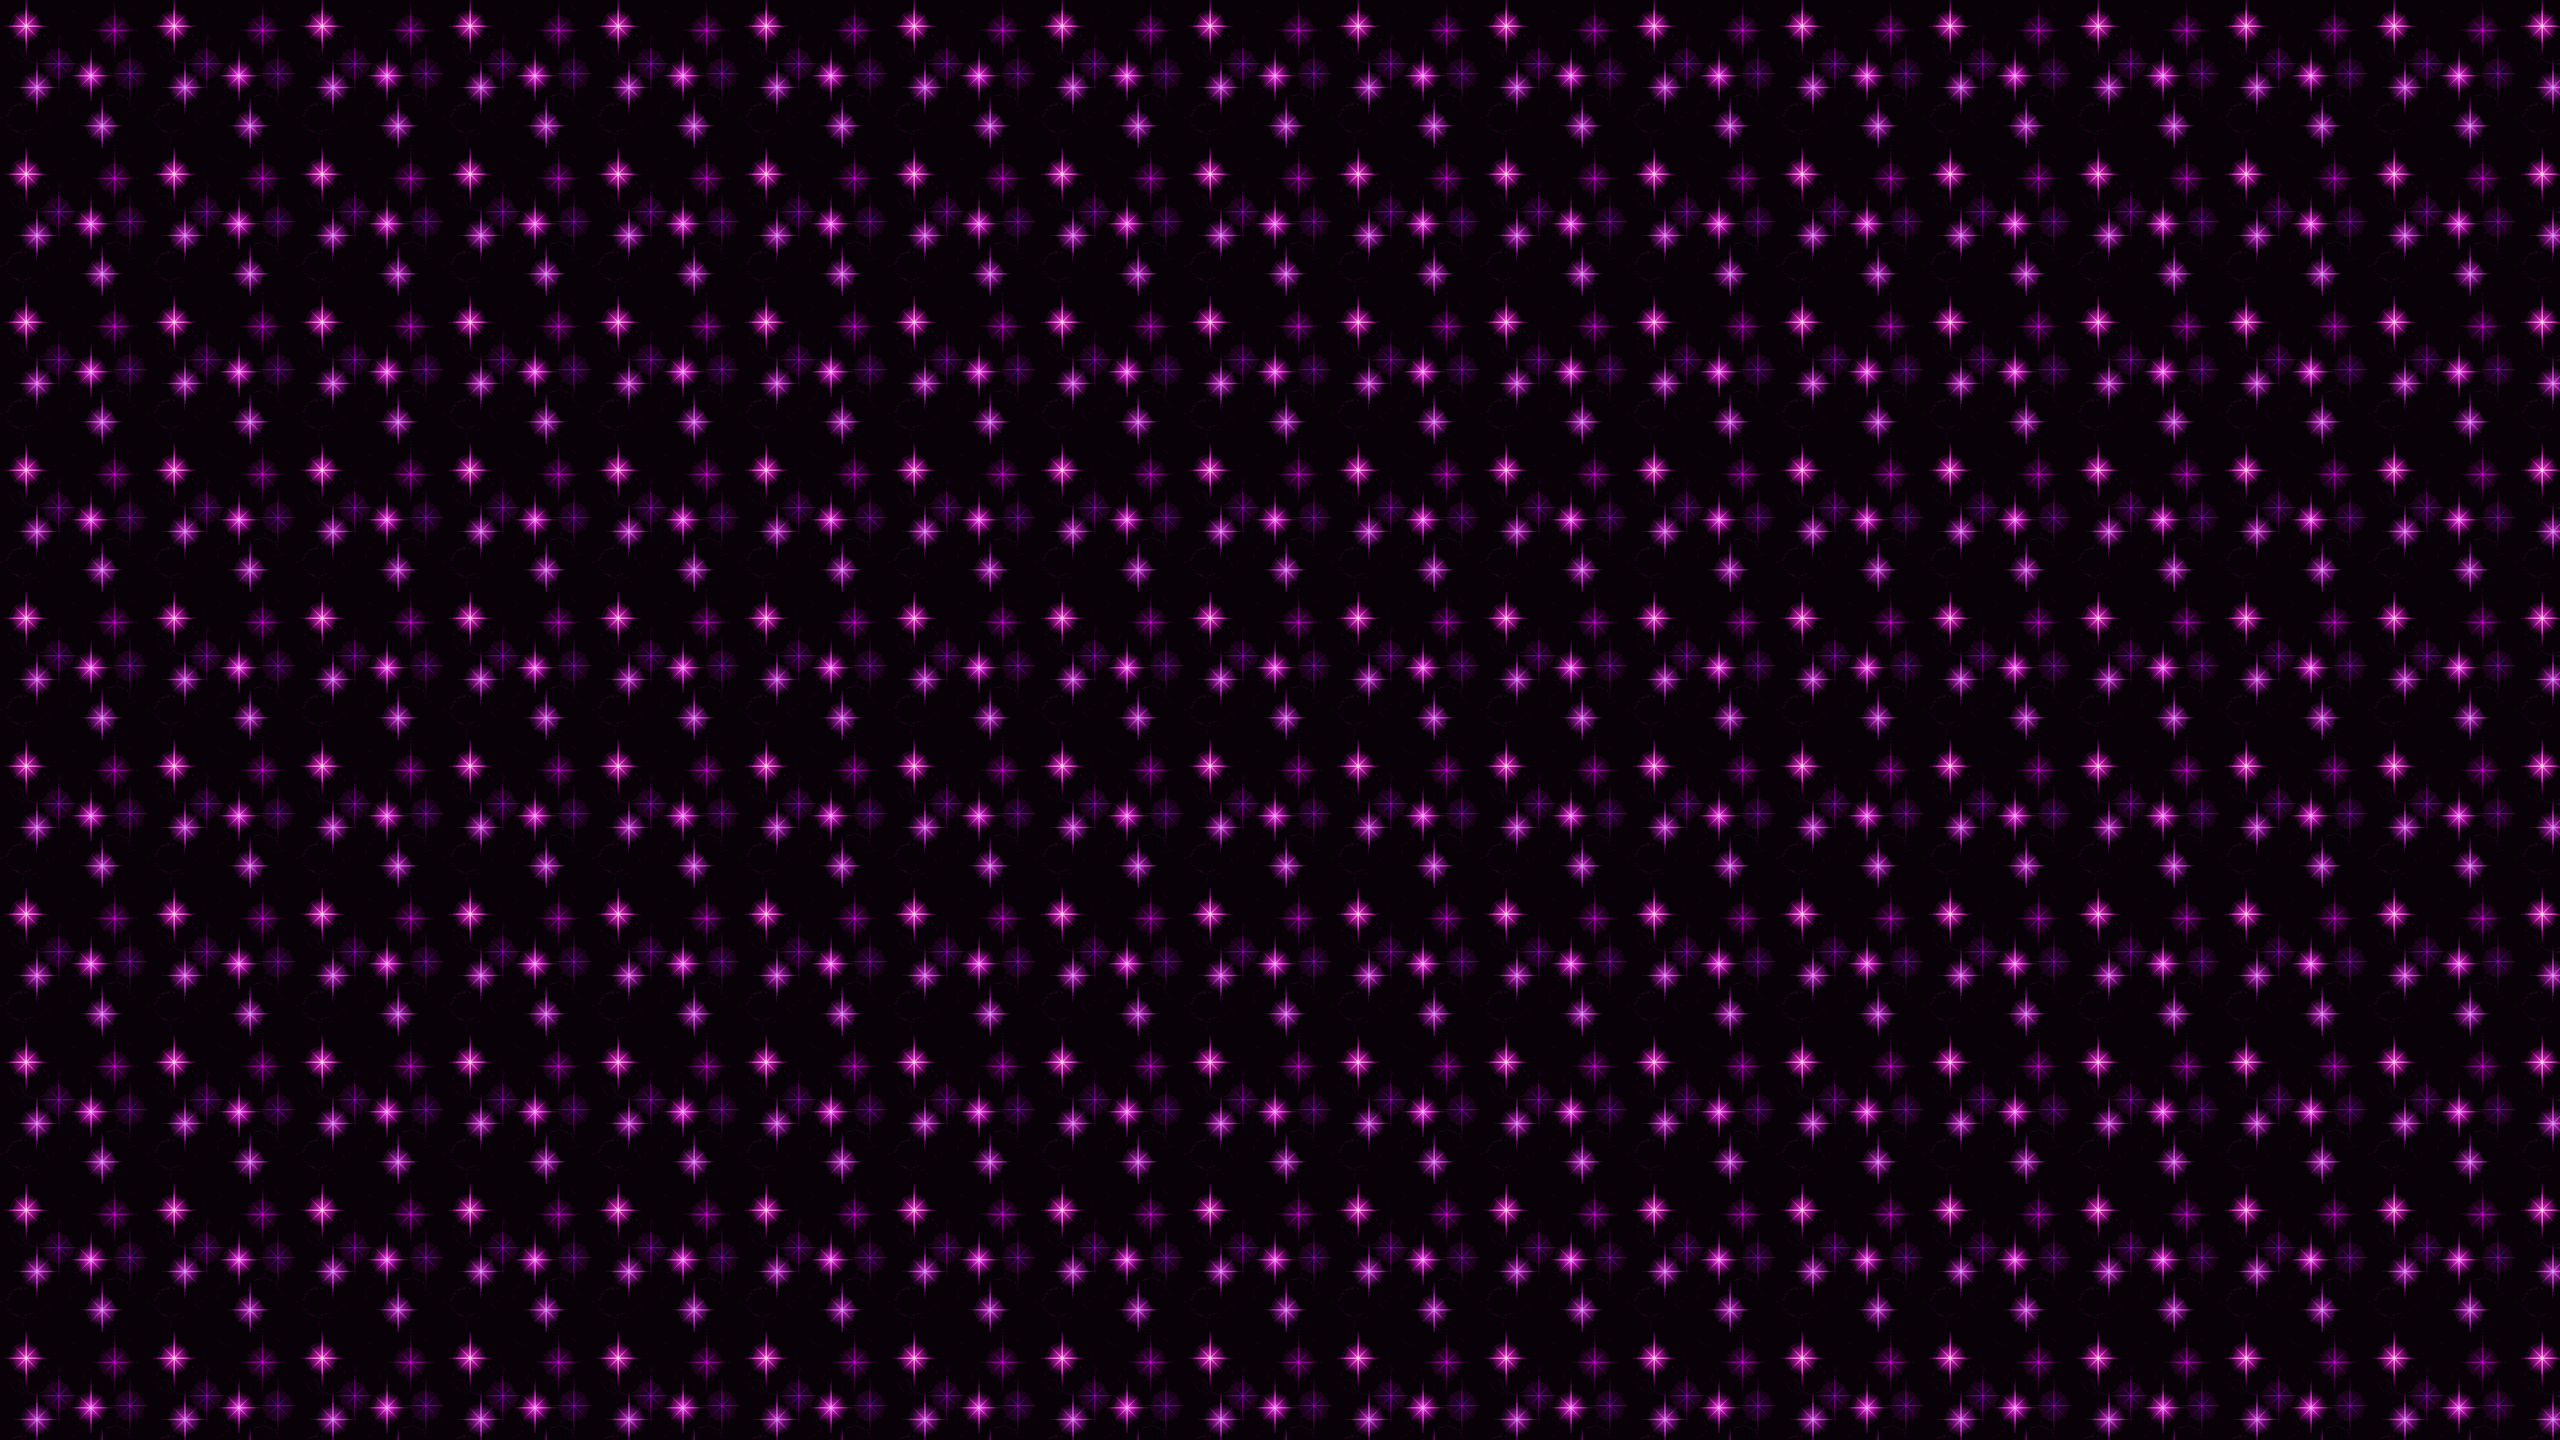 Installing this Purple Glitter Stars Desktop Wallpaper is easy Just